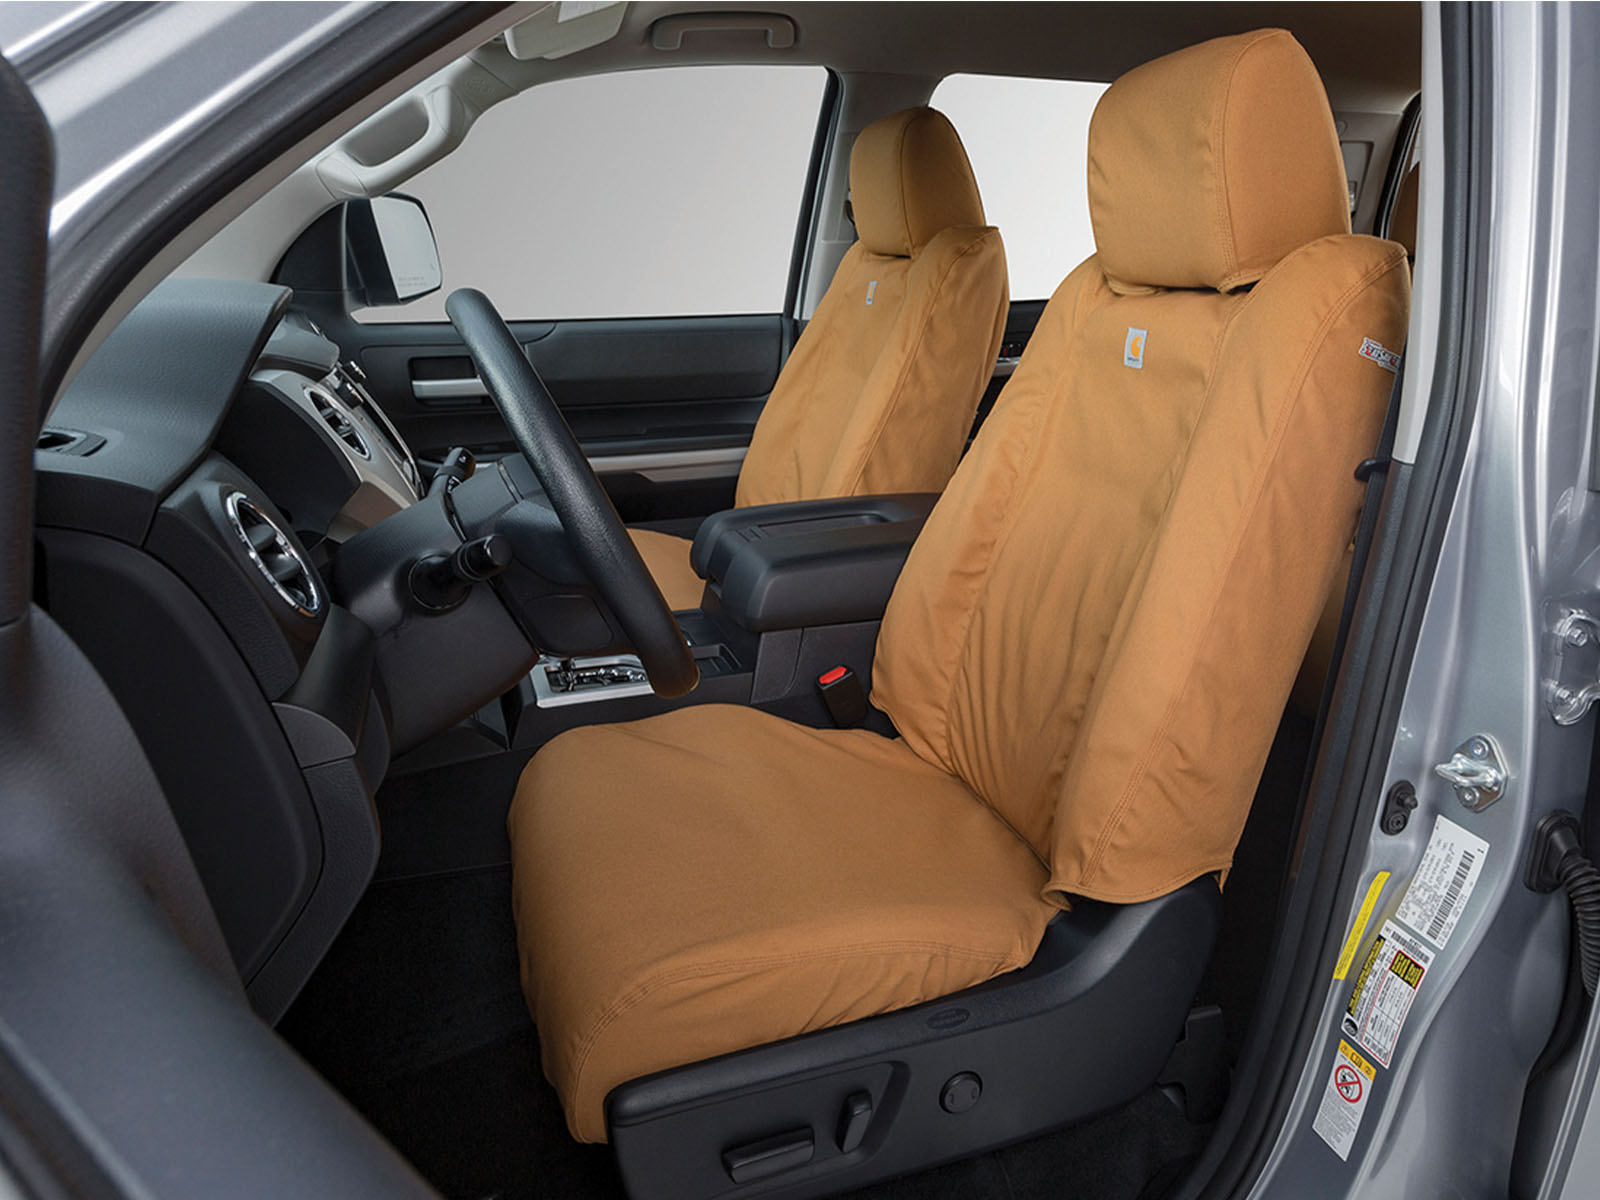 2021 Toyota Tundra Seat Covers Realtruck - 2021 Toyota Tundra Waterproof Seat Covers